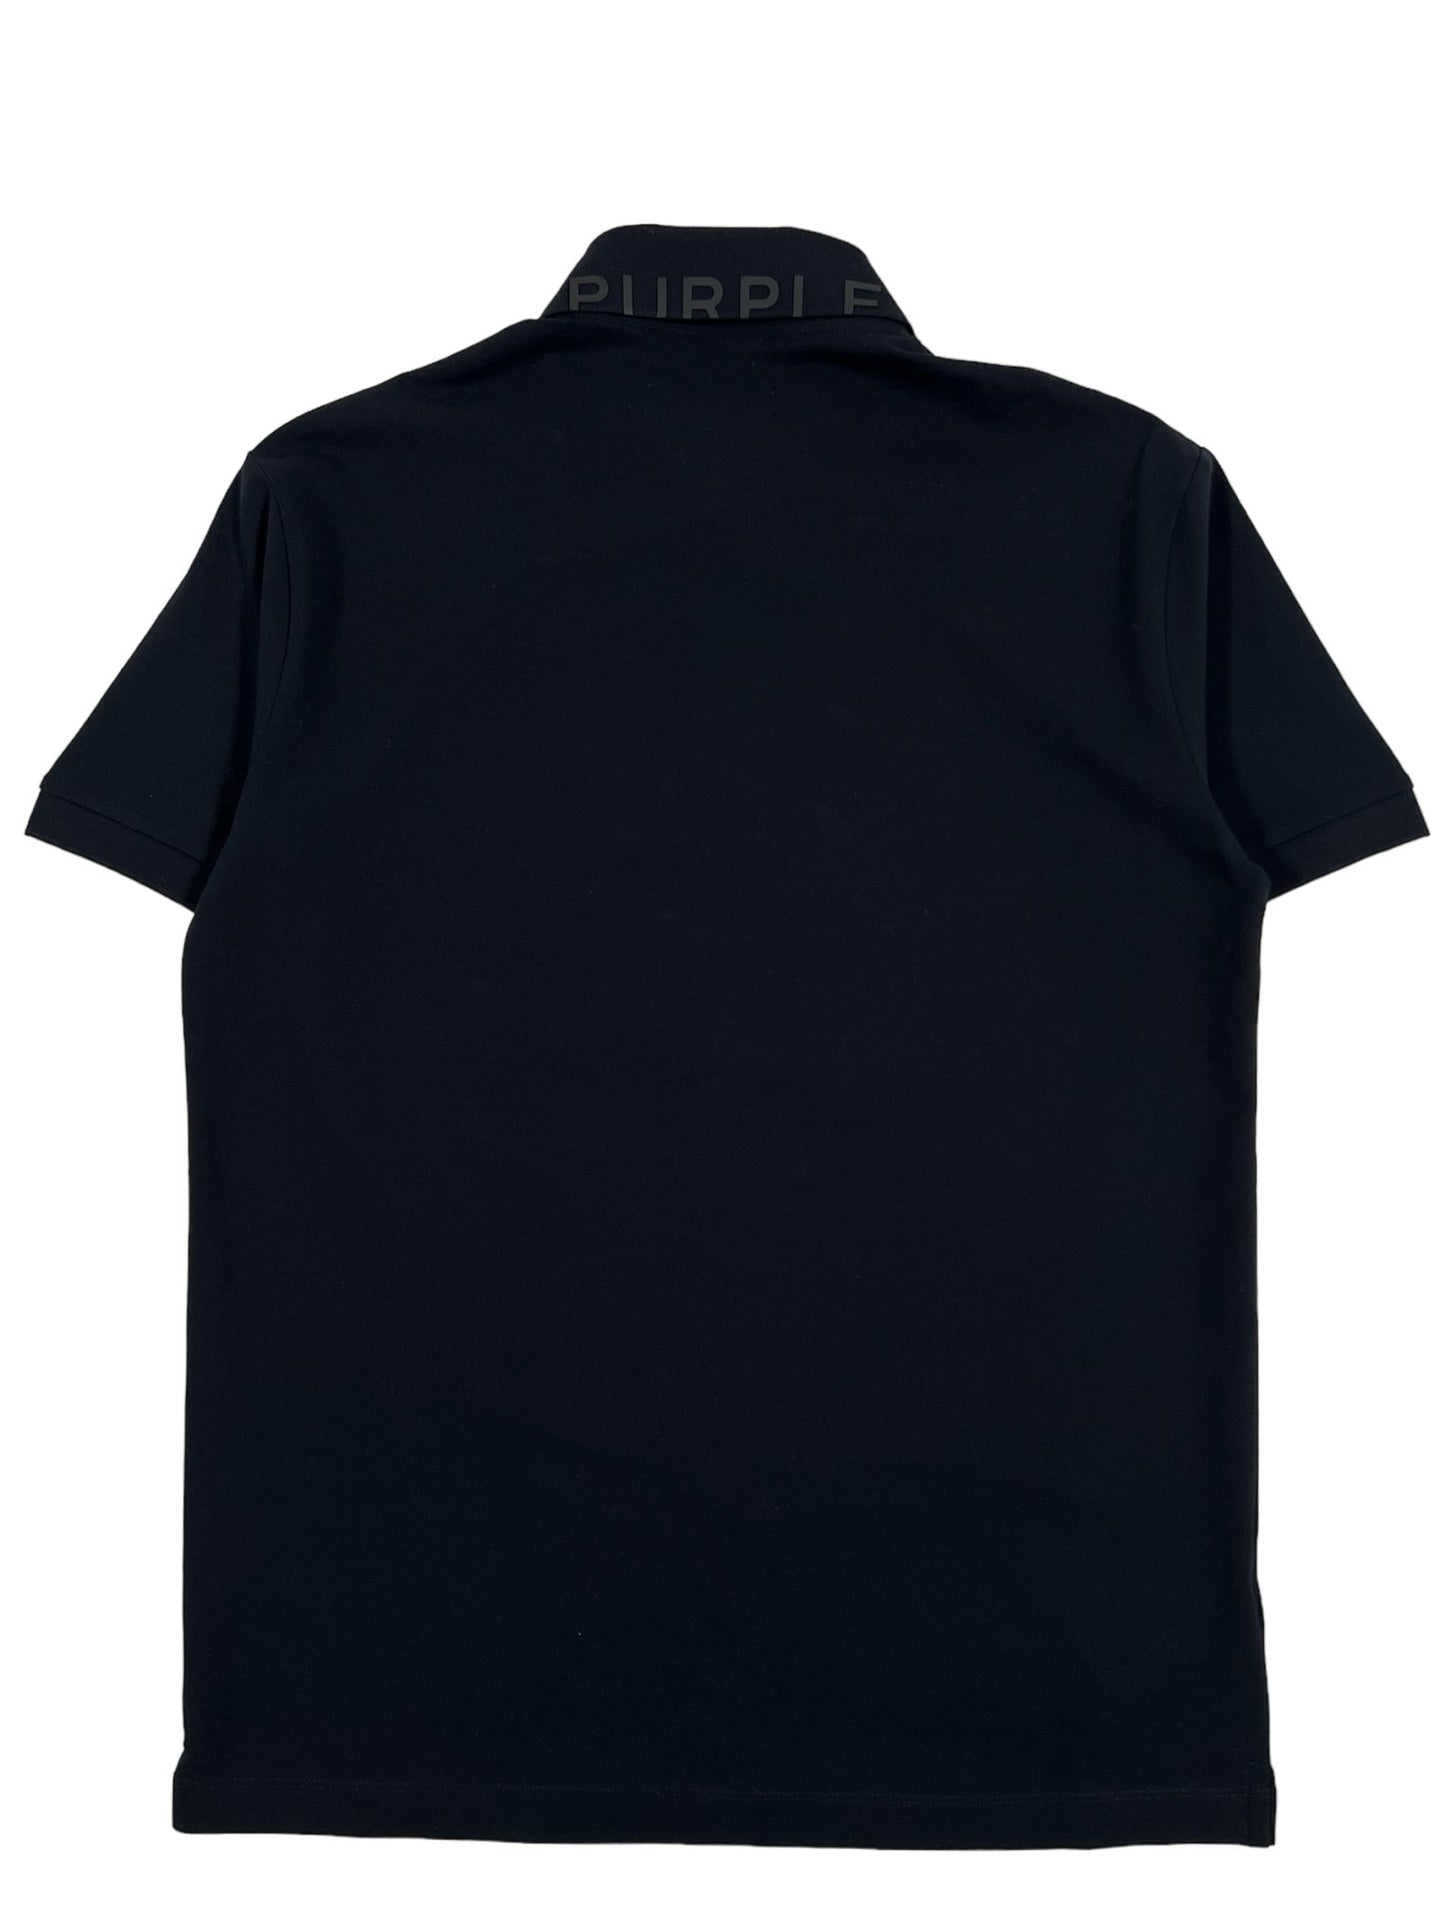 The back of a PURPLE BRAND P125-MPBP PIQUE KNIT POLO BLACK shirt.